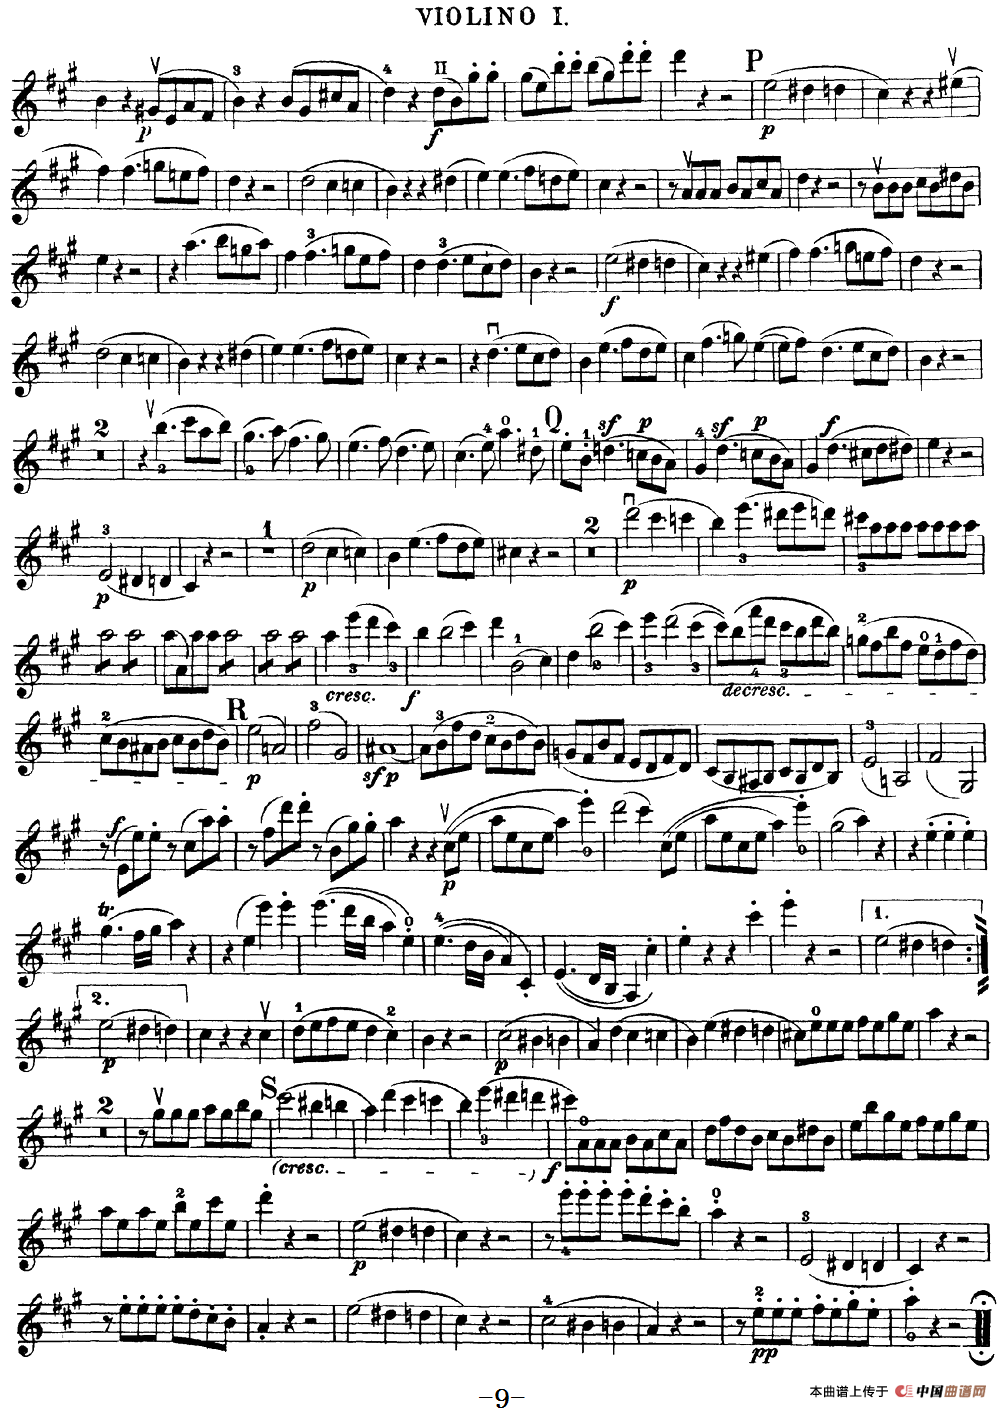 Mozart《Quartet No.18 in A Major,K.464》（Violin 1分谱）